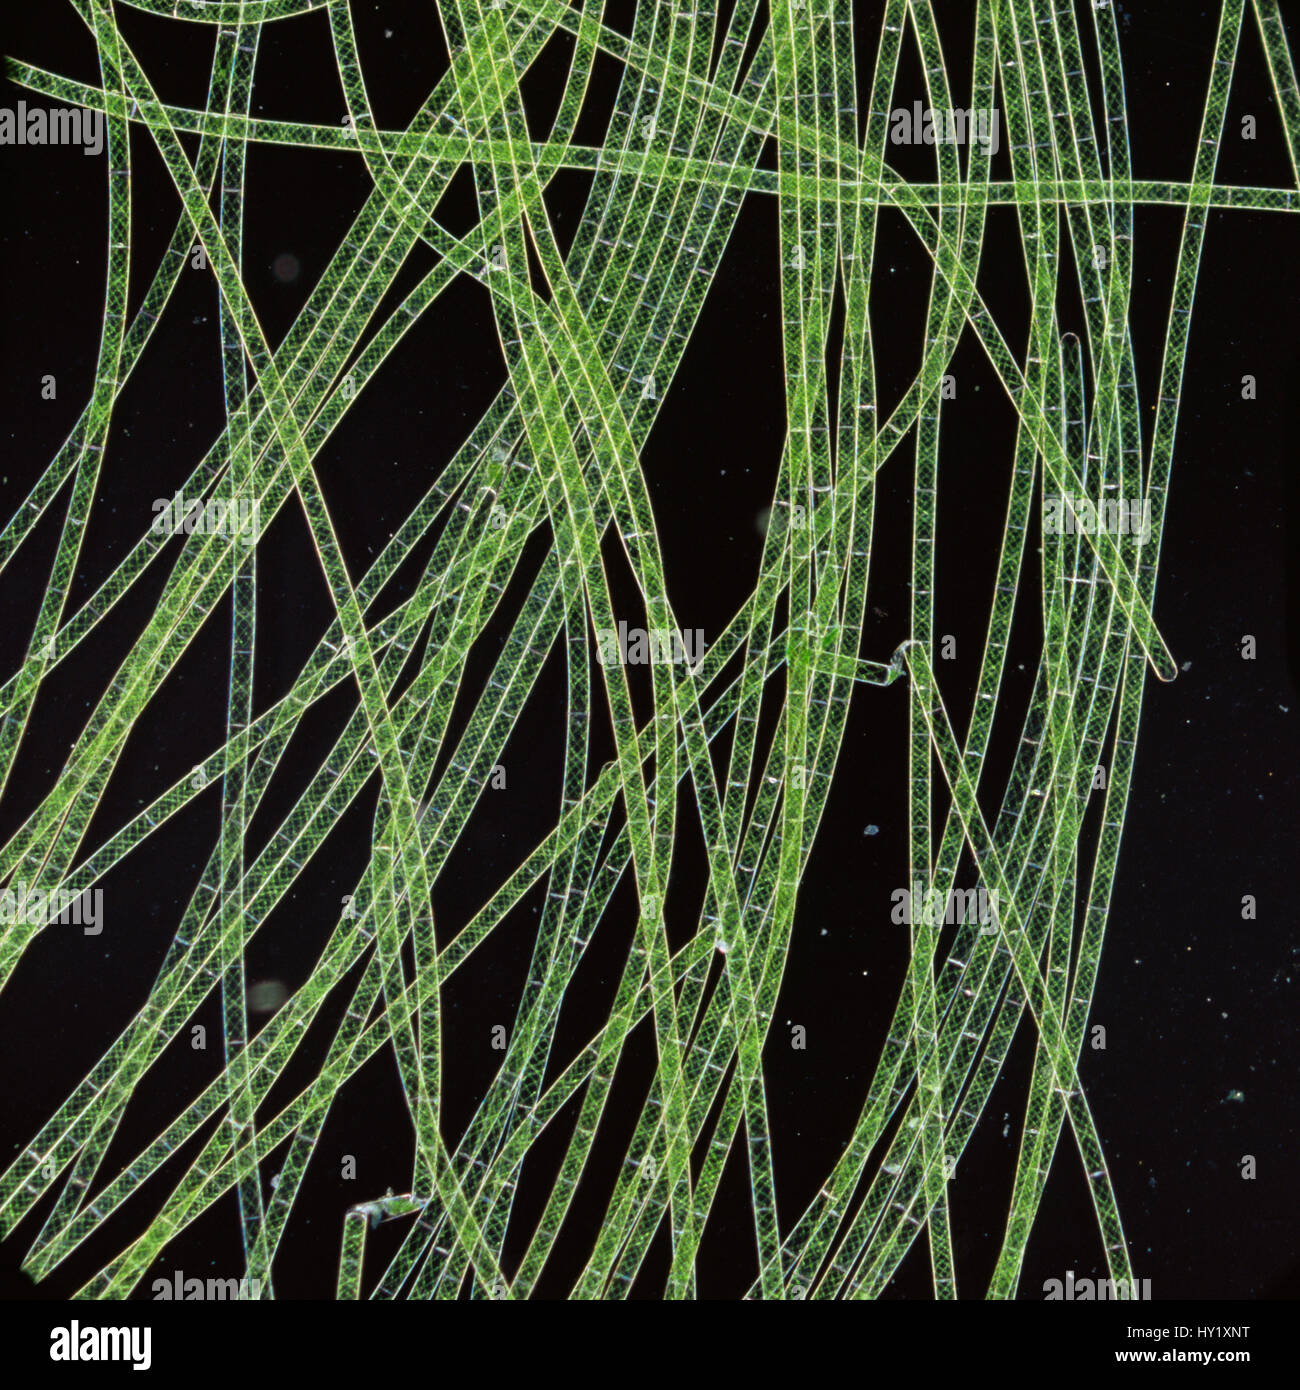 Alga verde filamentosa carófita fotografías e imágenes de alta resolución -  Alamy